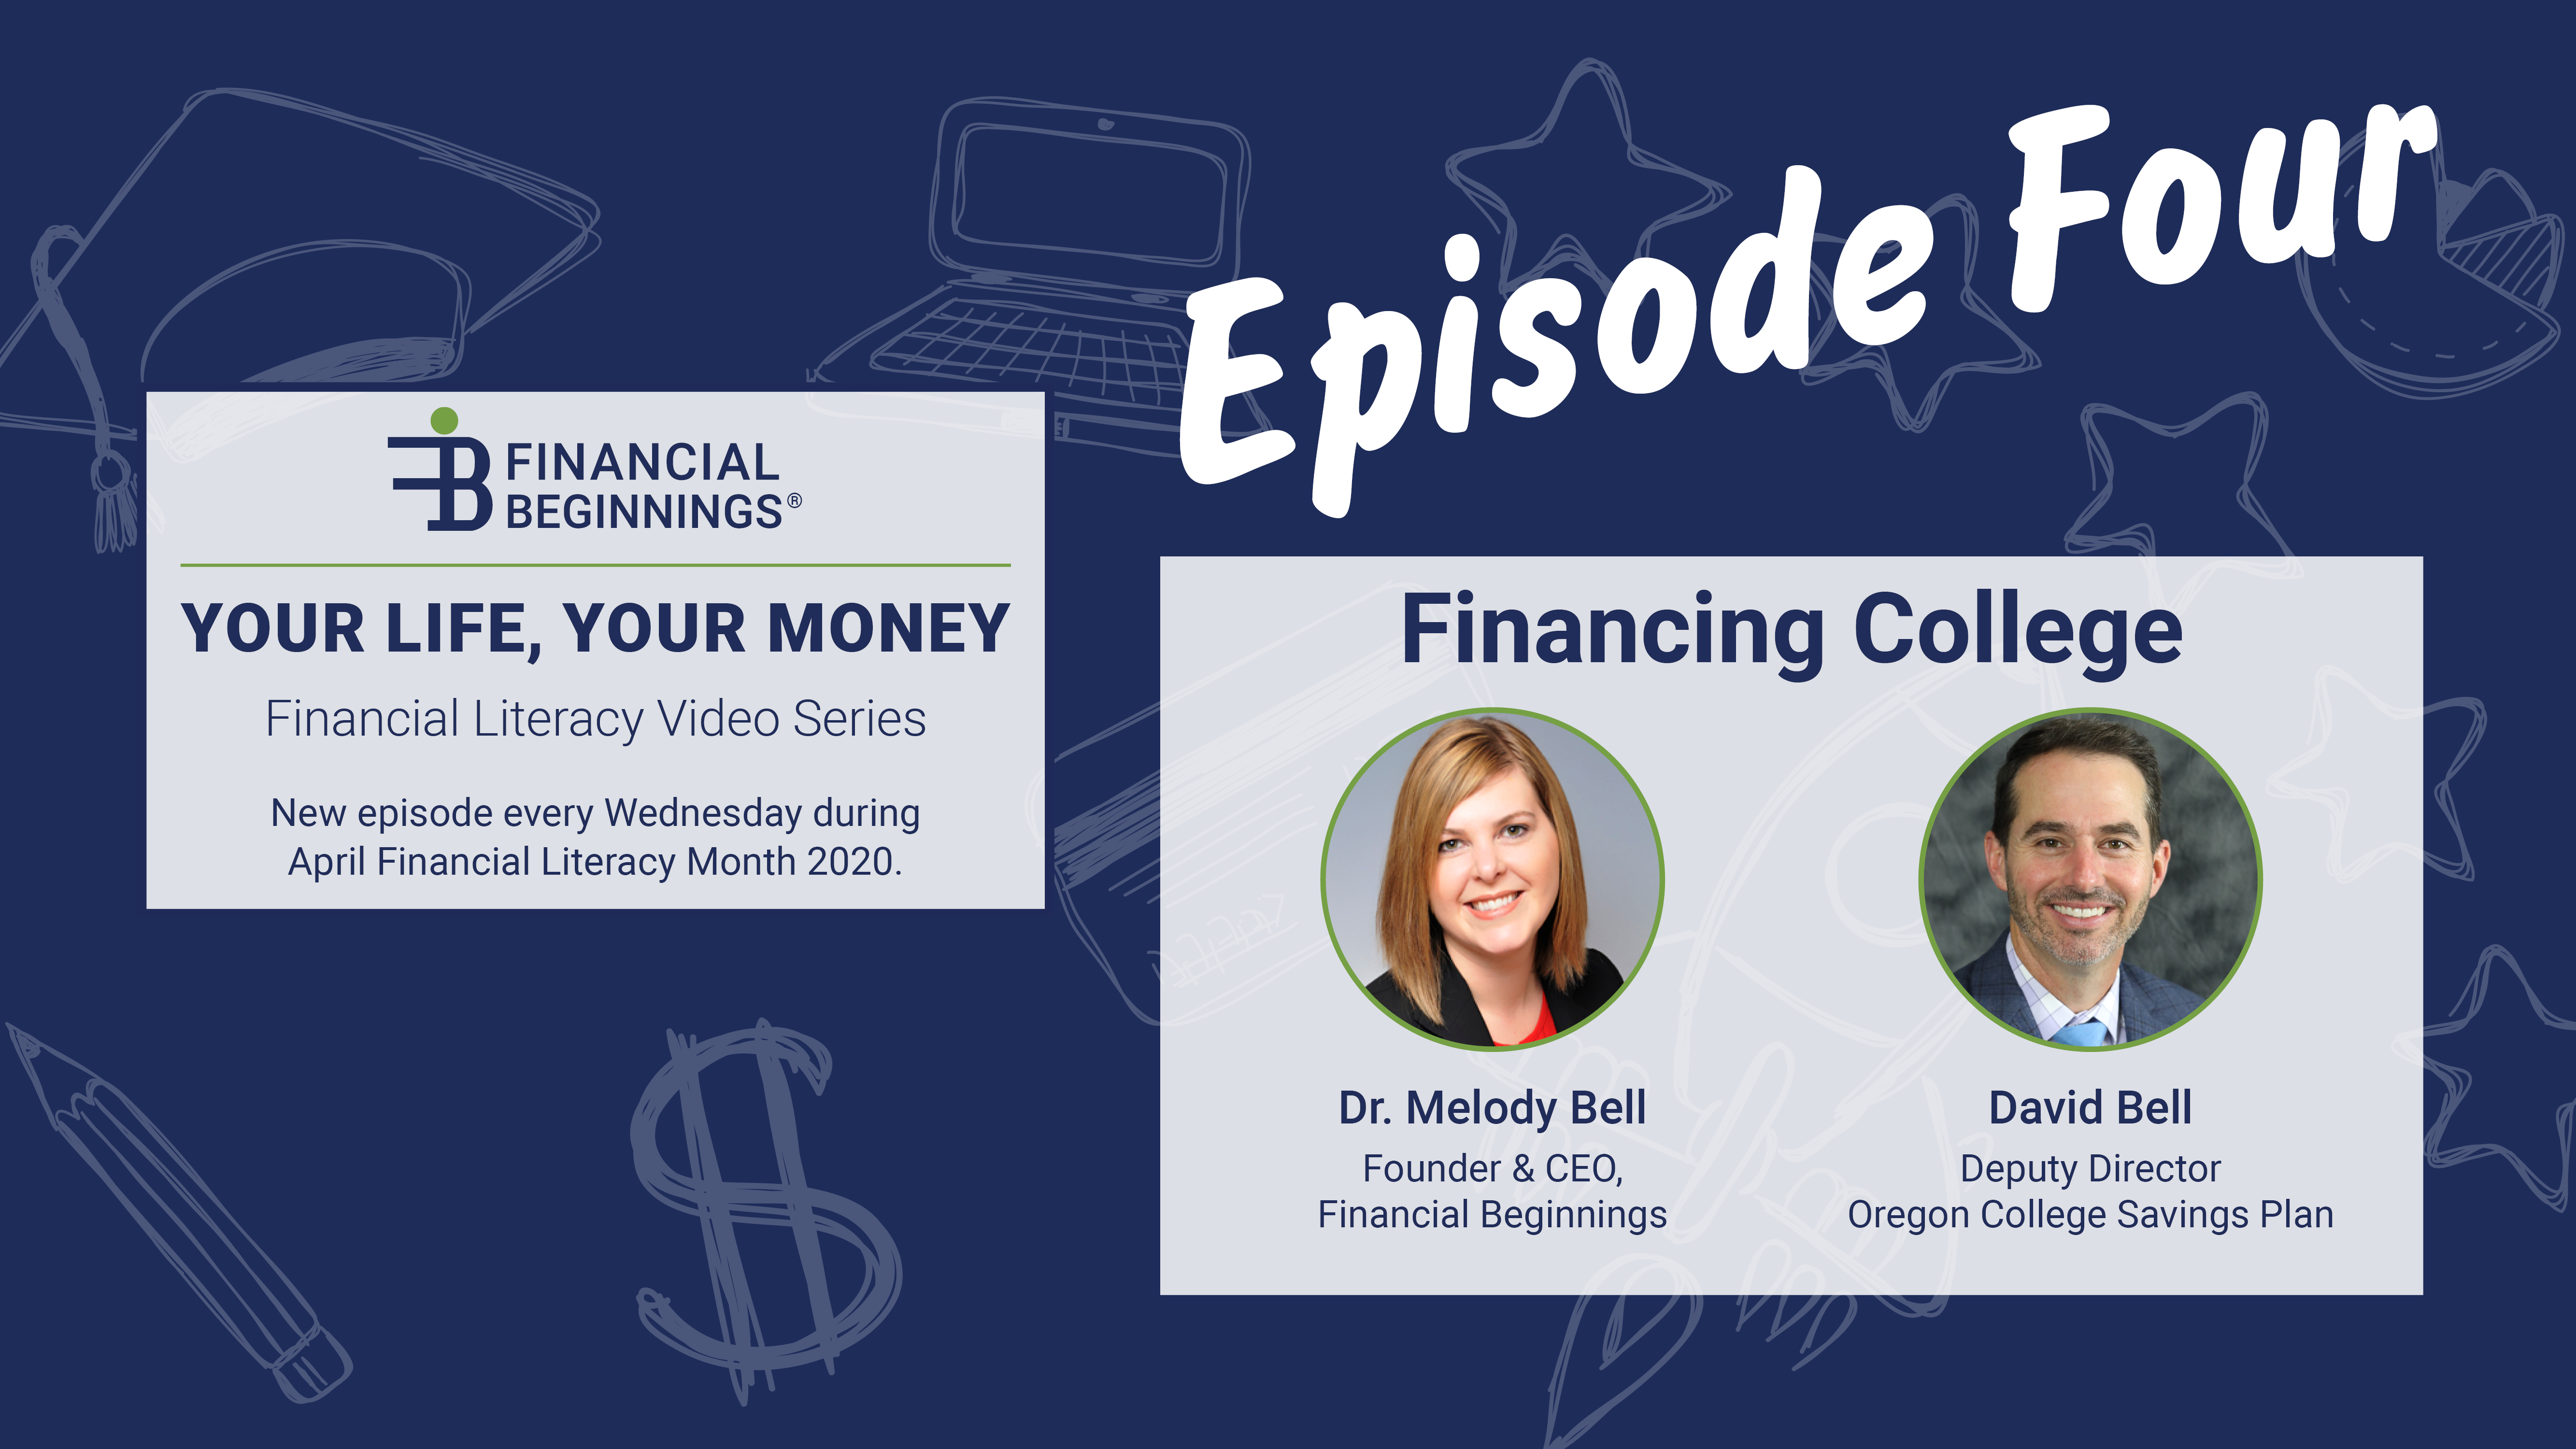 Episode 4: Financing College